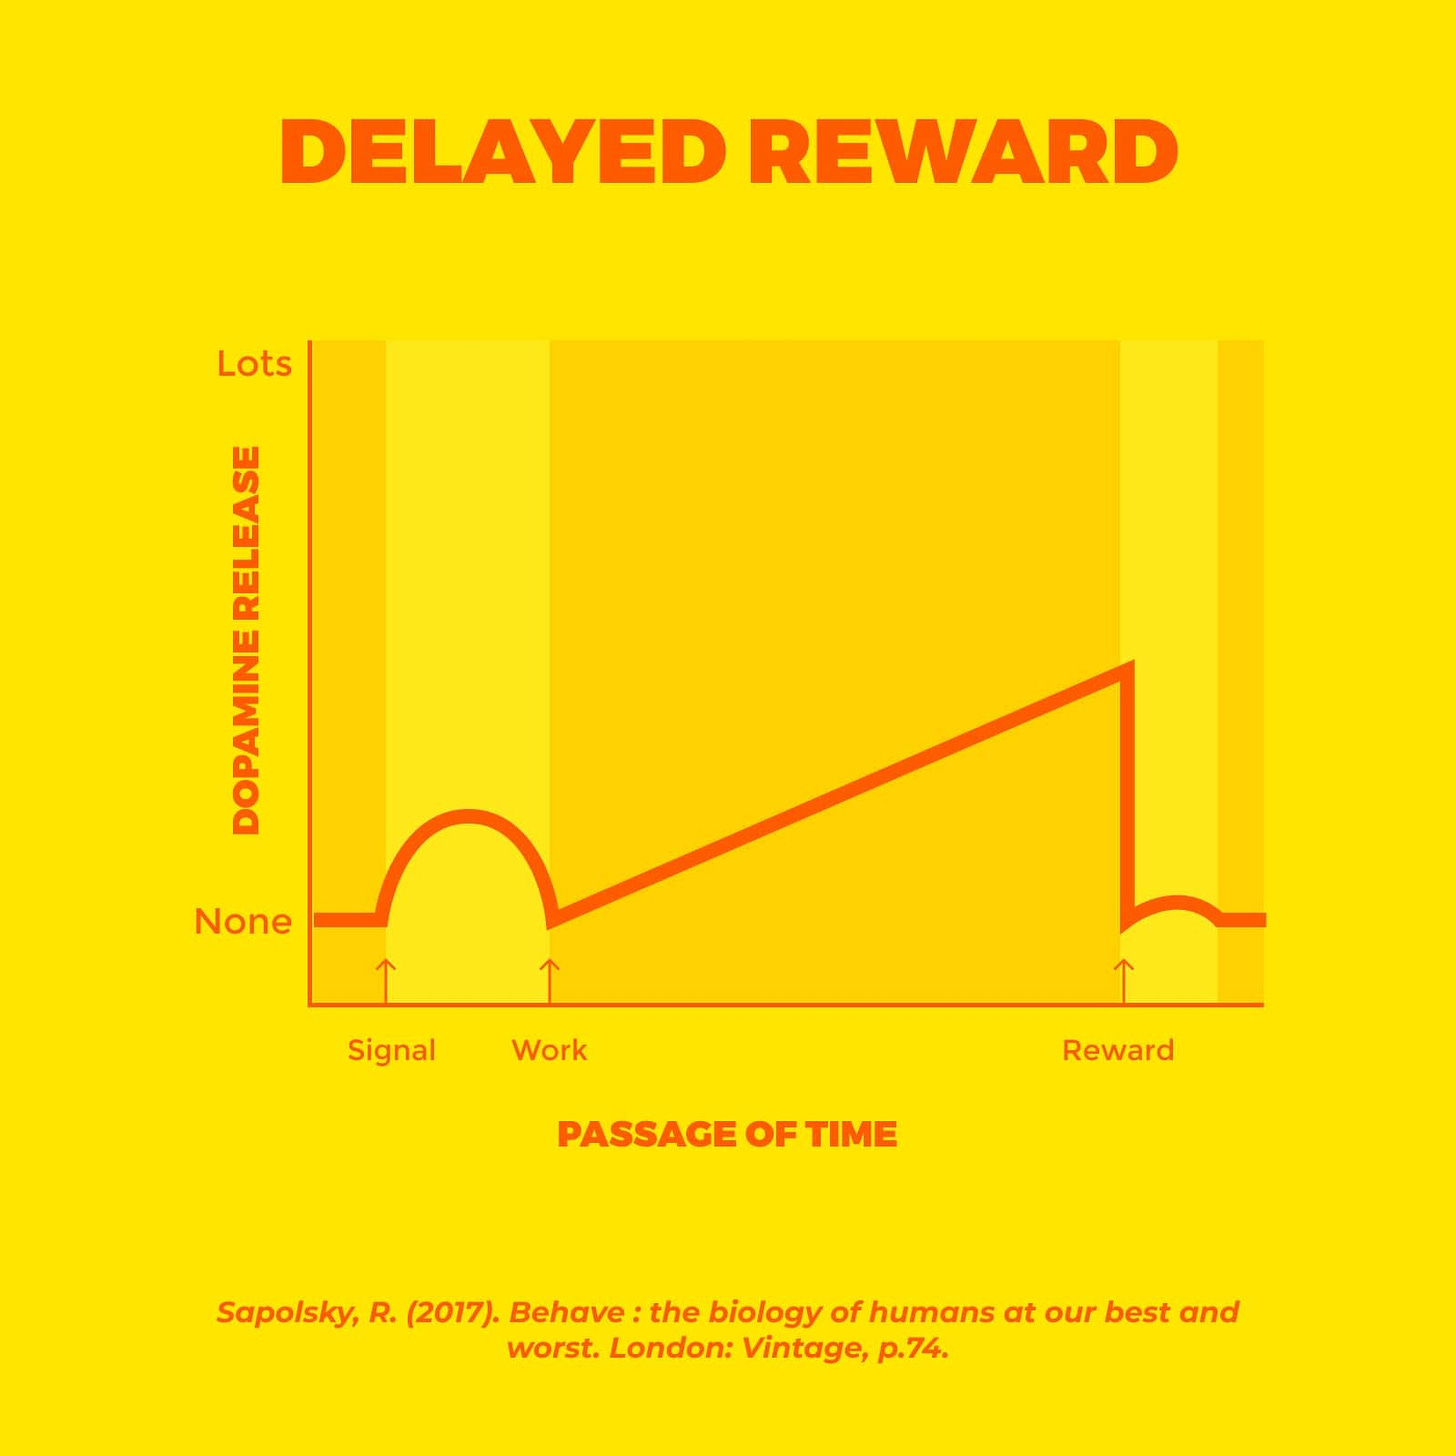 Chart of delayed reward from dopamine